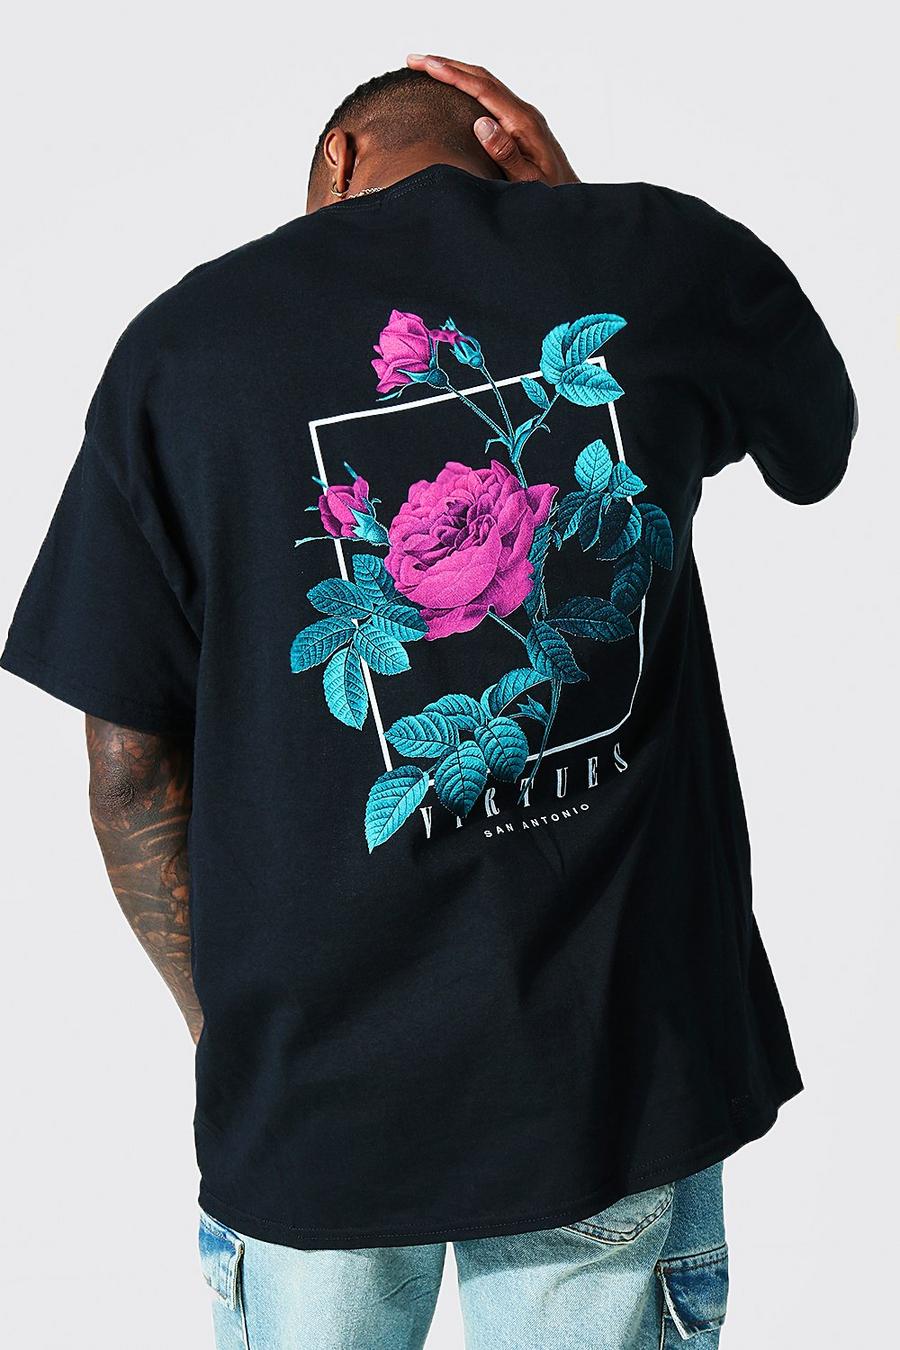 Camiseta oversize con estampado gráfico Virtues, Black nero image number 1